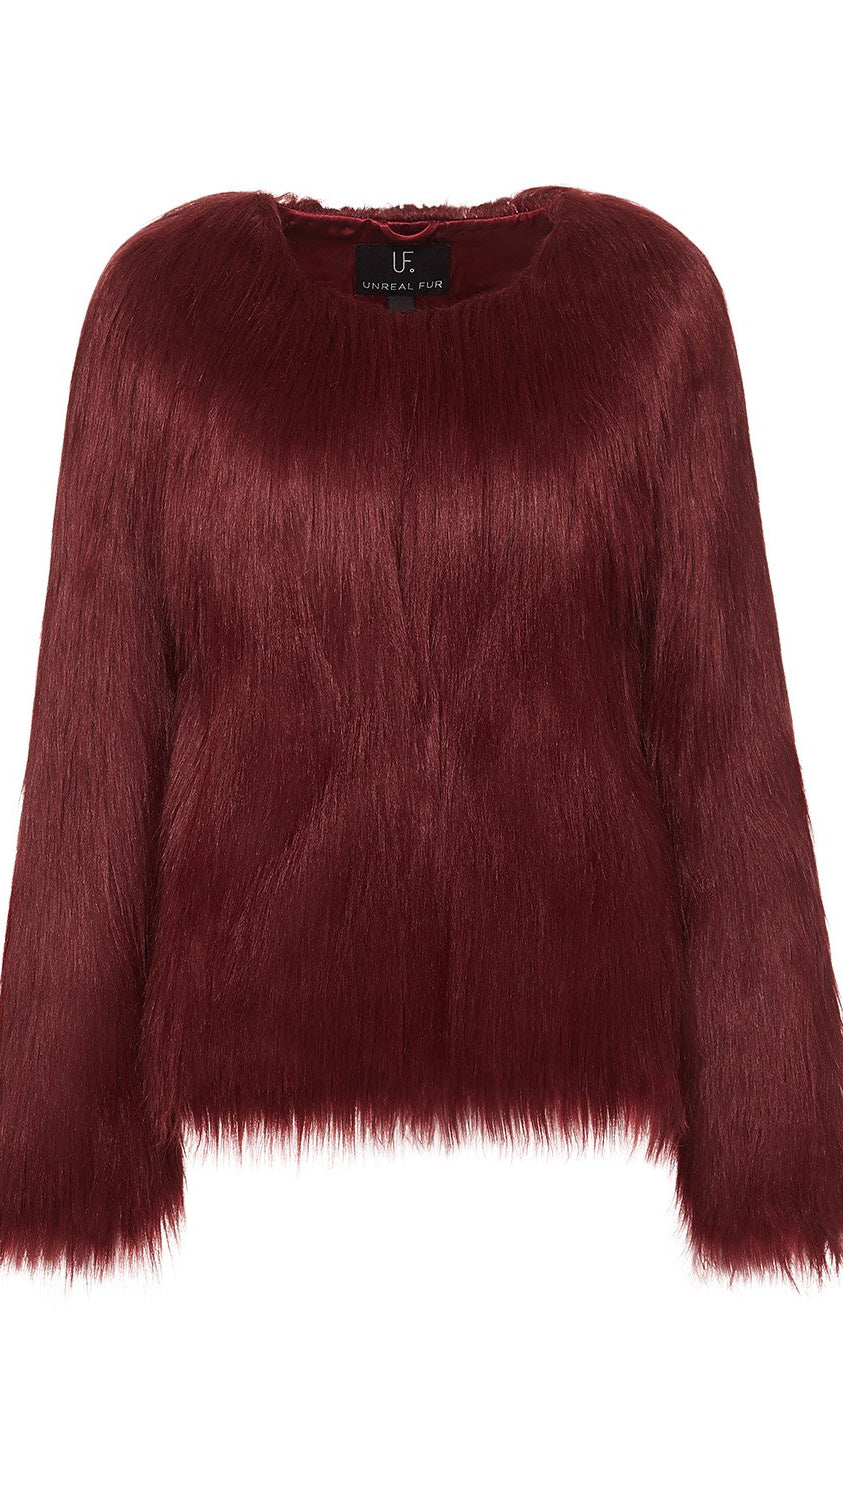 Unreal Dream Faux Fur Jacket in Burgundy by Unreal Fur